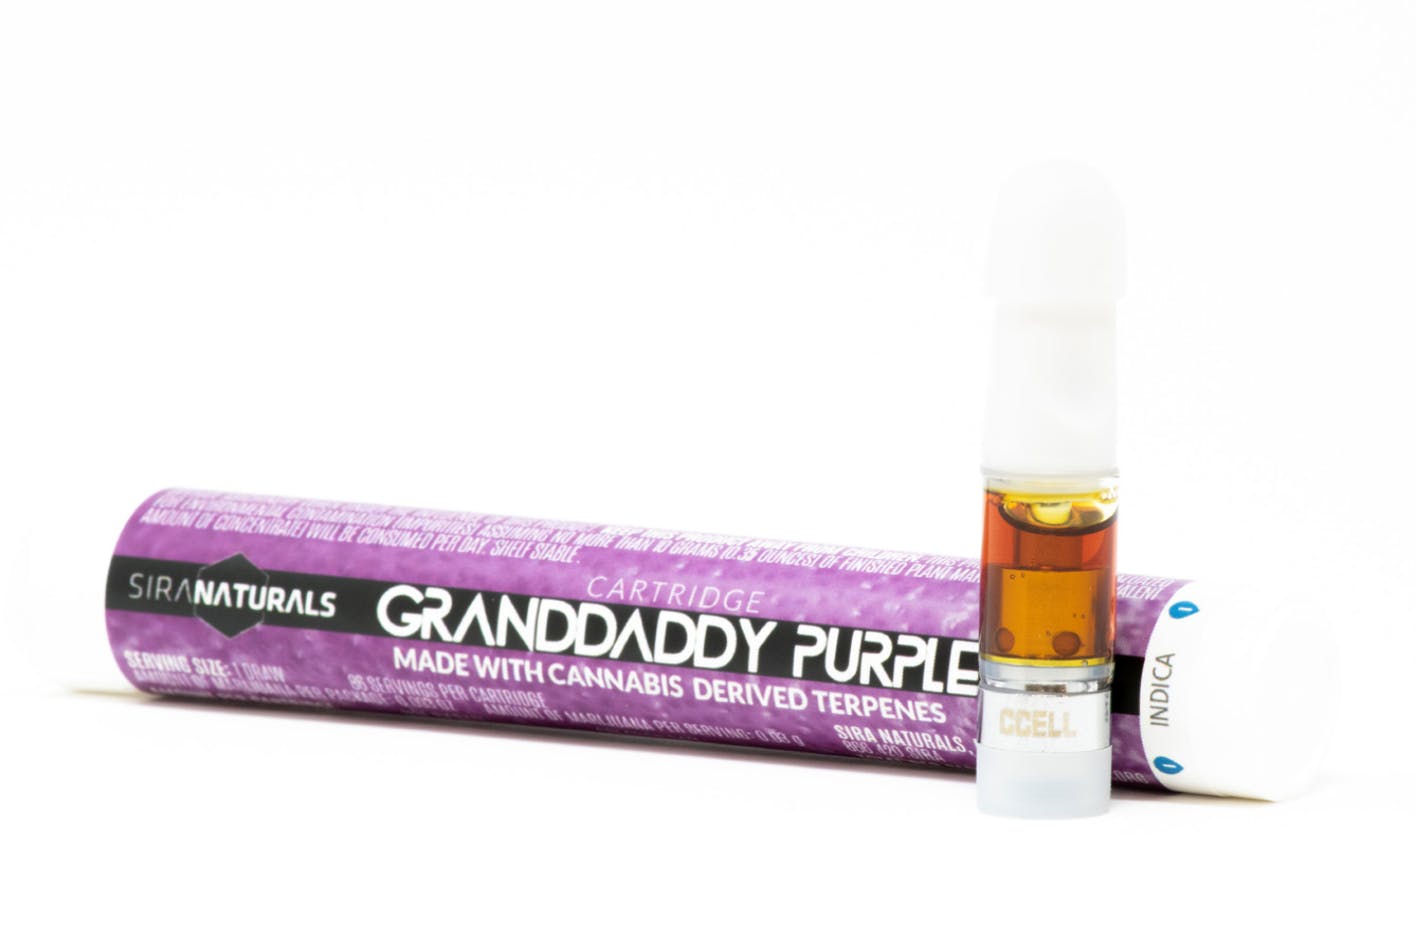 marijuana-dispensaries-29-franklin-st-needham-heights-cannabis-derived-terp-cartridge-granddaddy-purple